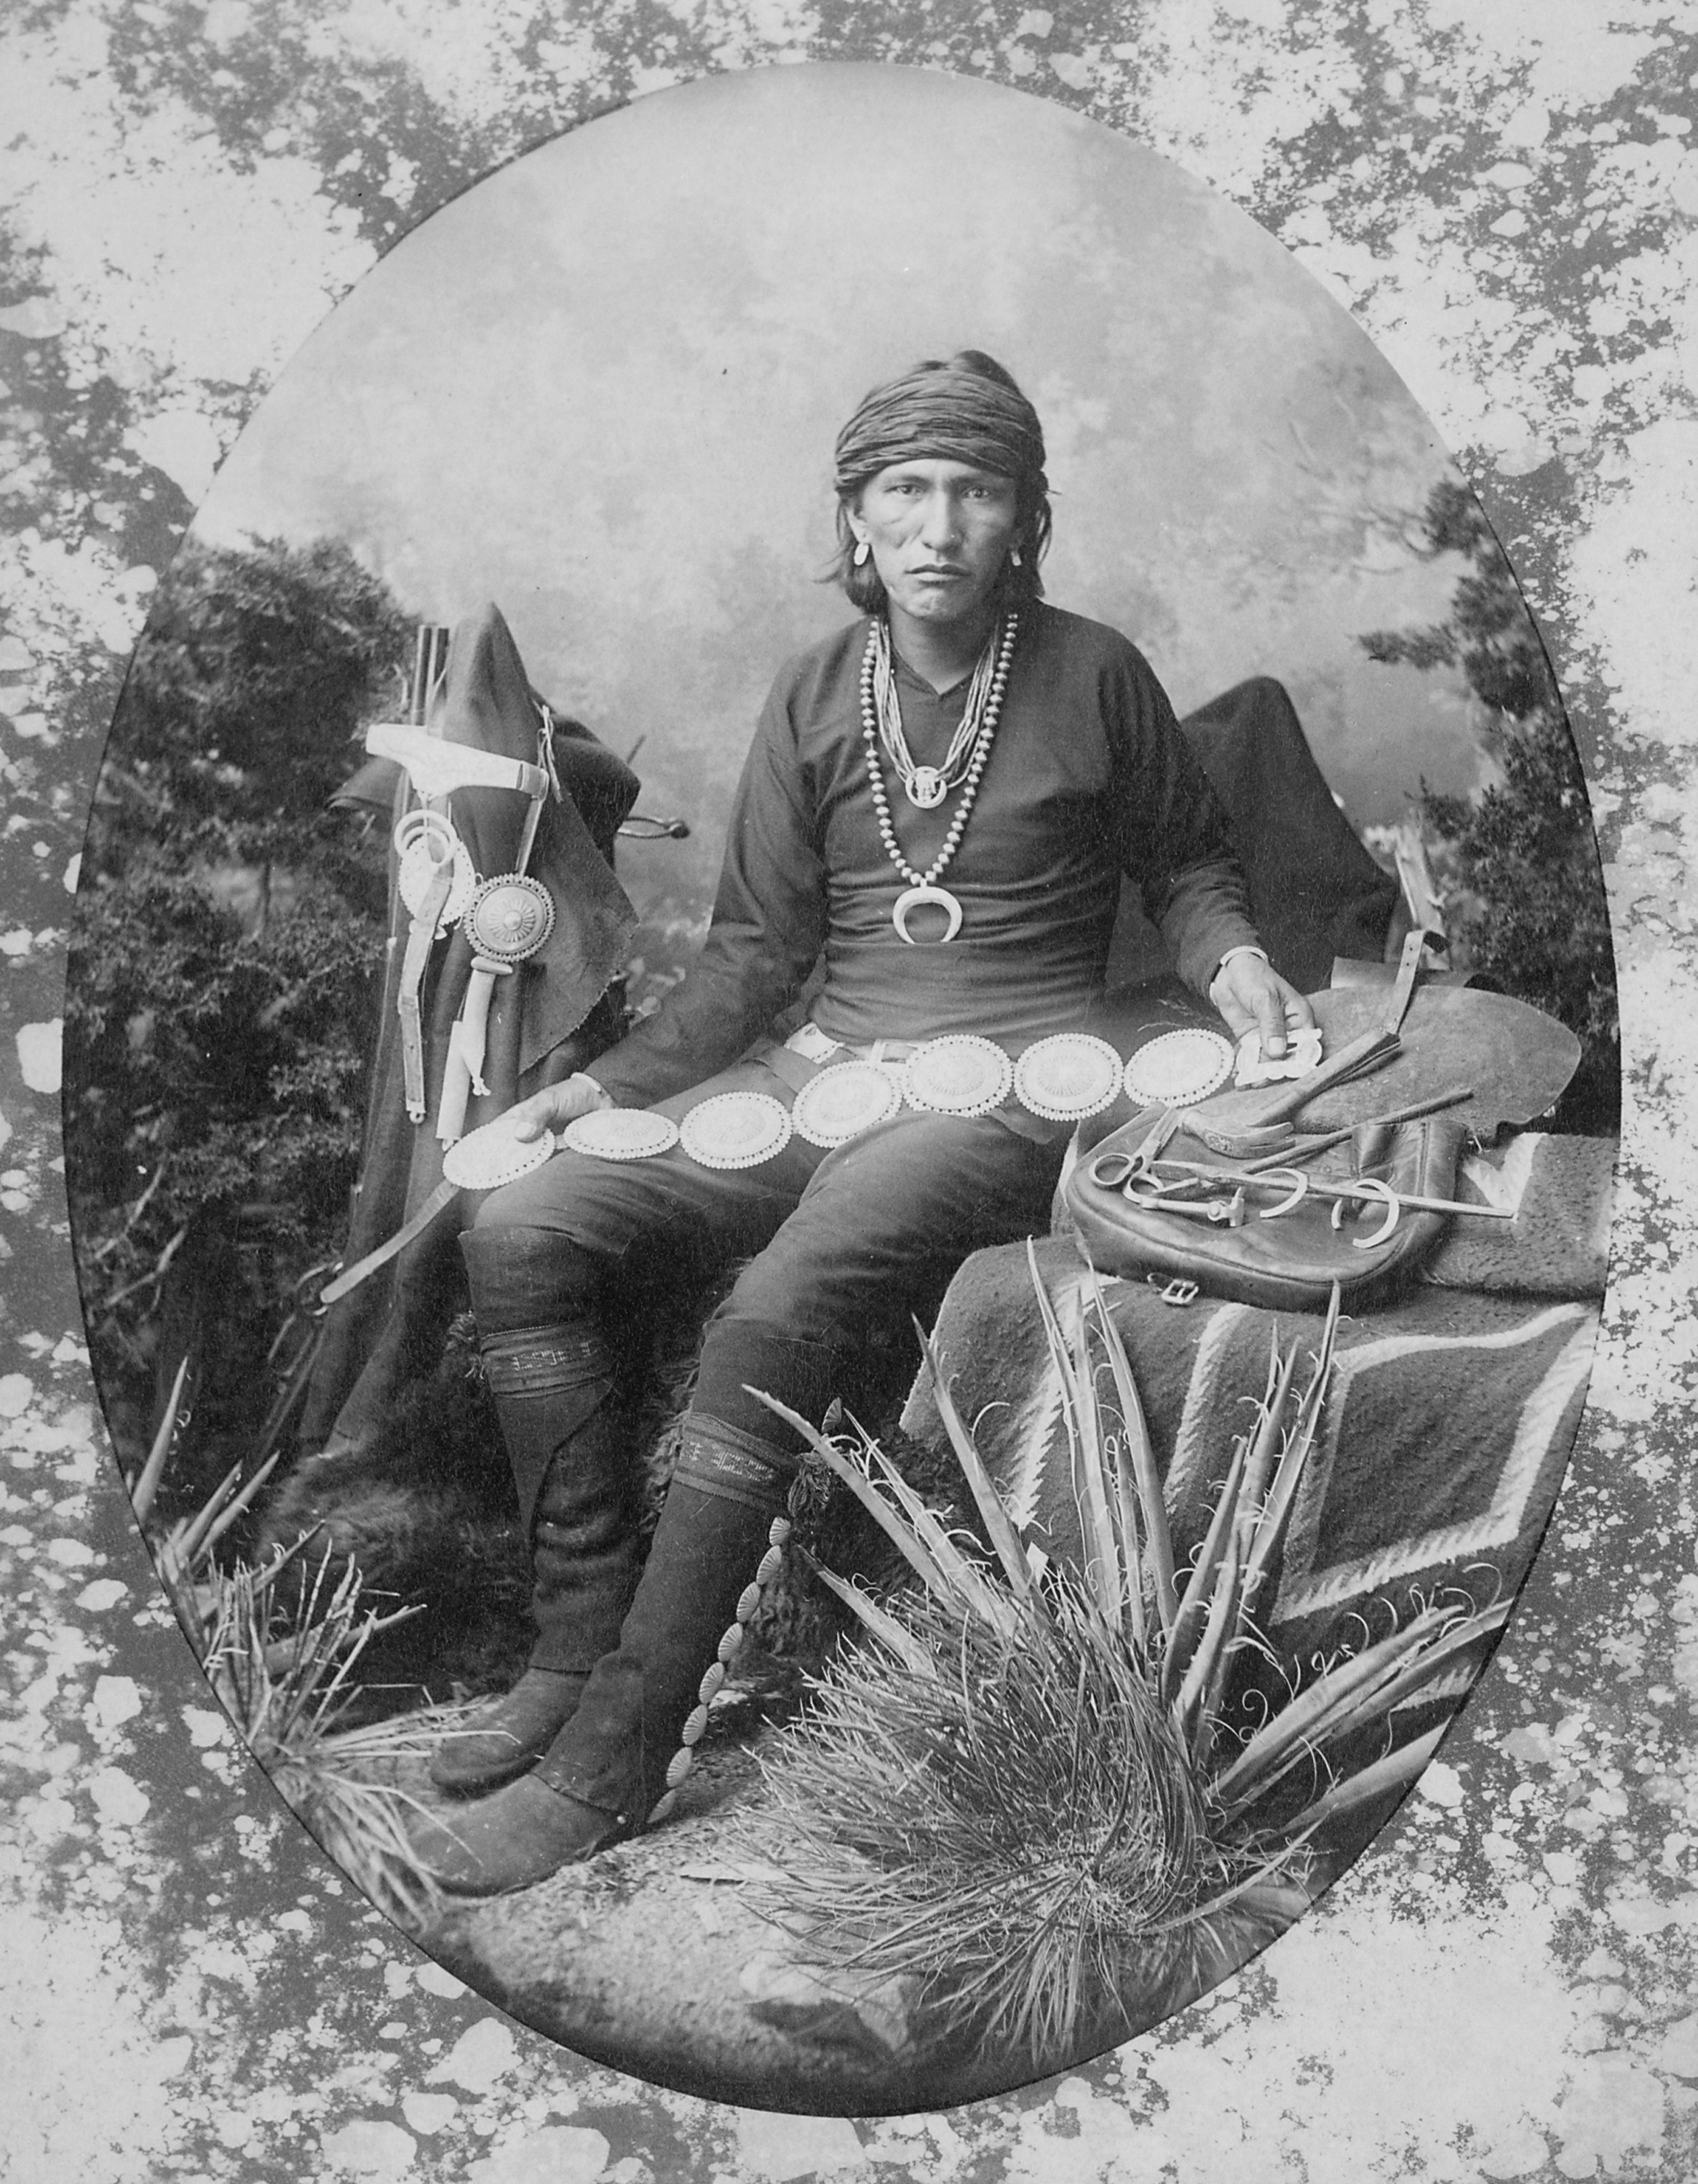 Navajo silversmith with examples of his work and tools, 1880 - NARA - 518913